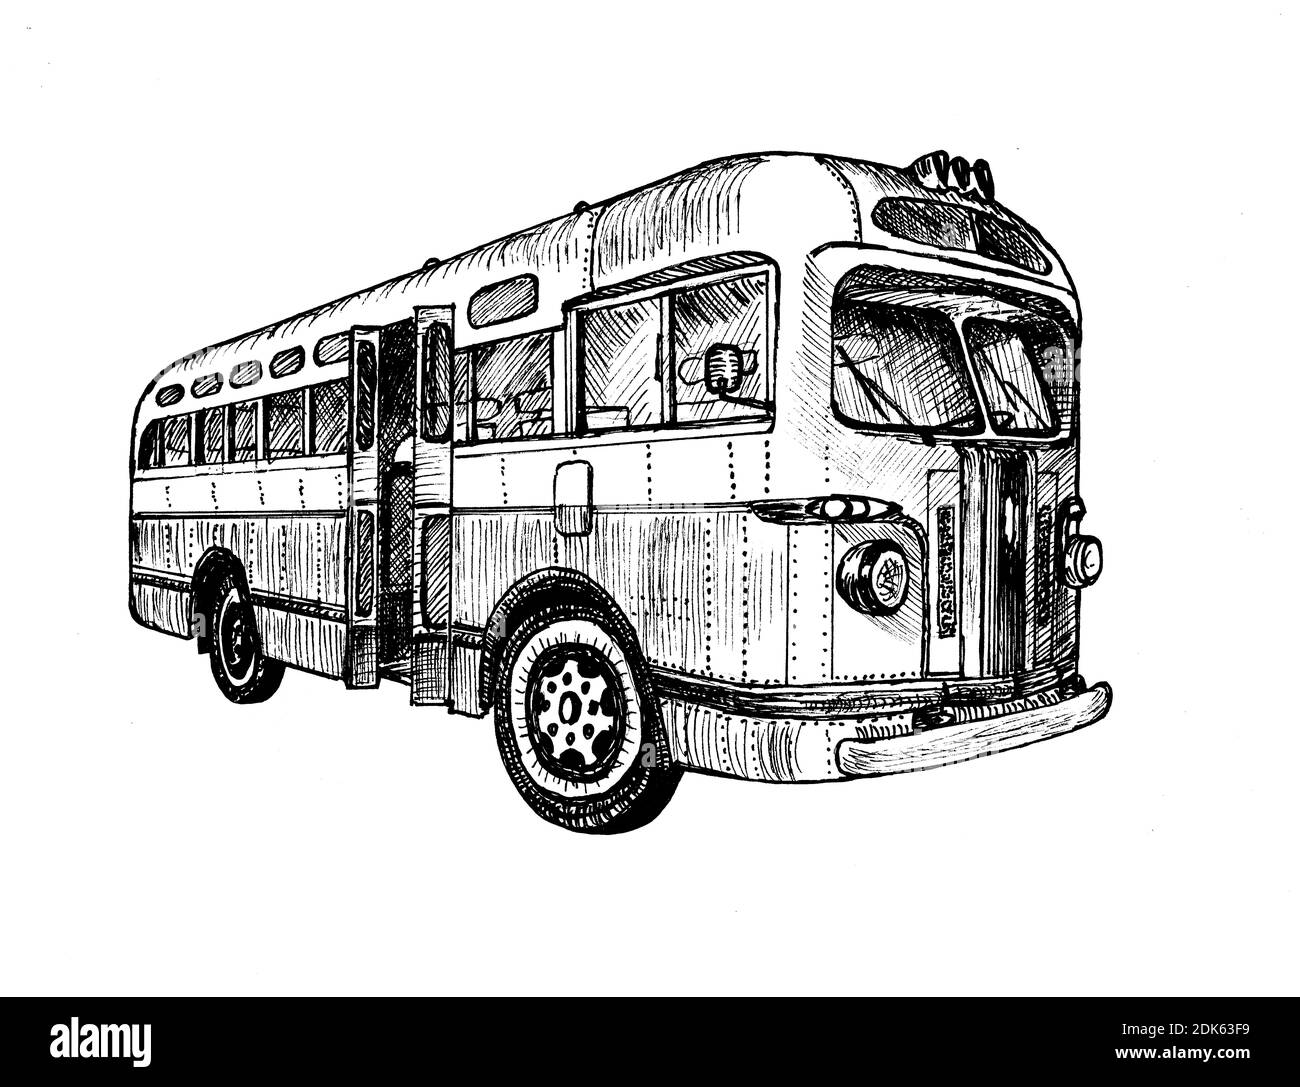 Hand drawn vintage retro city bus, doodle sketch graphics monochrome illustration on white background (originals, no tracing) Stock Photo